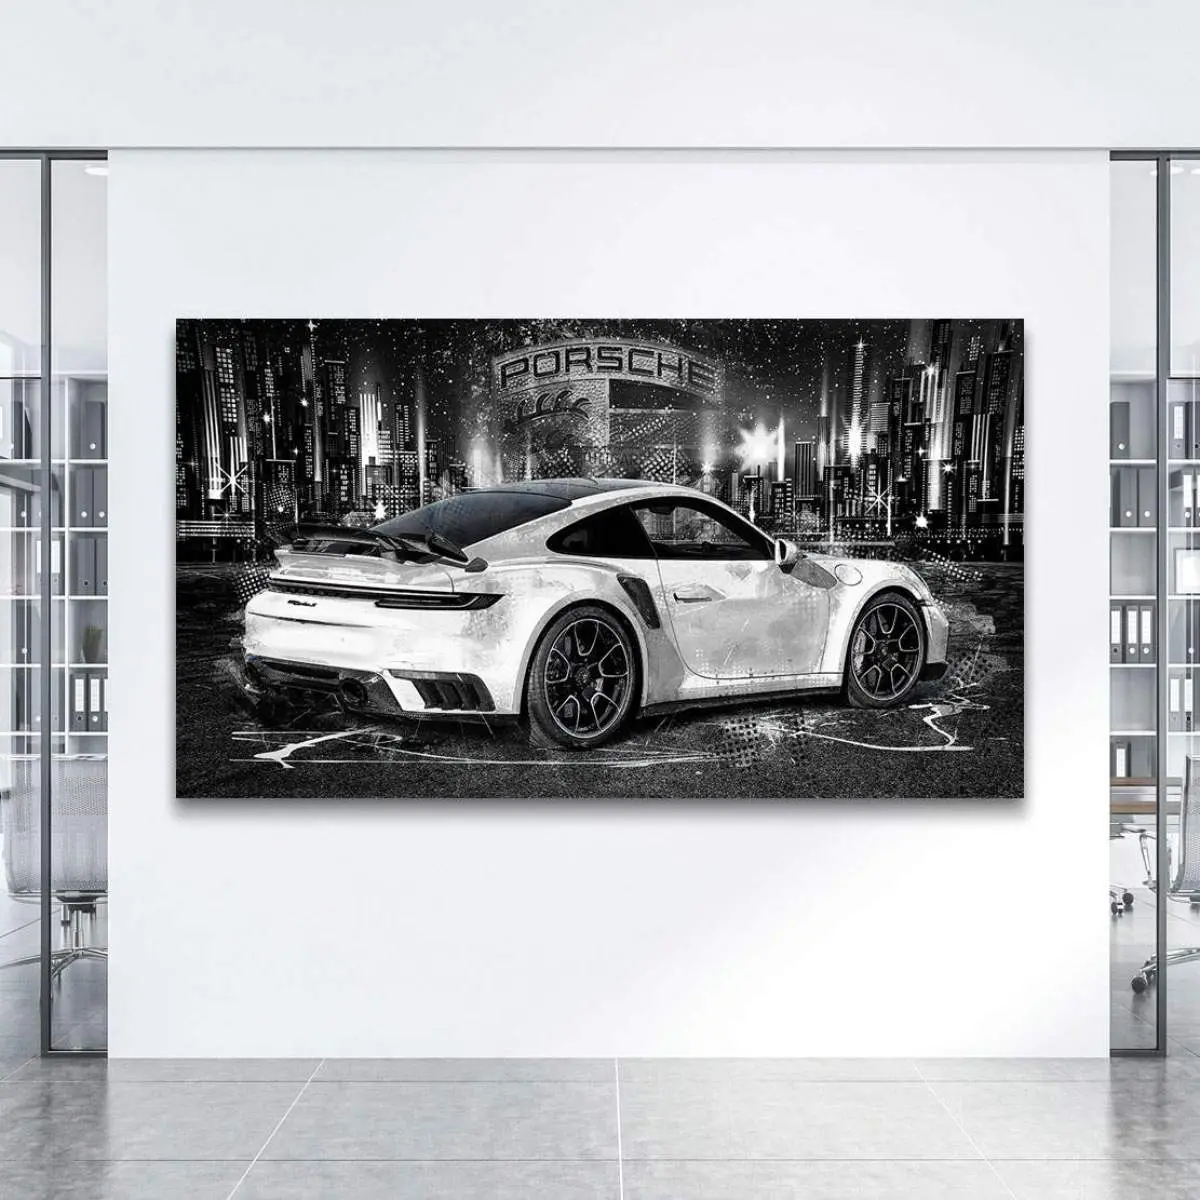 Wandbild Porsche 911Kunstgestalten24